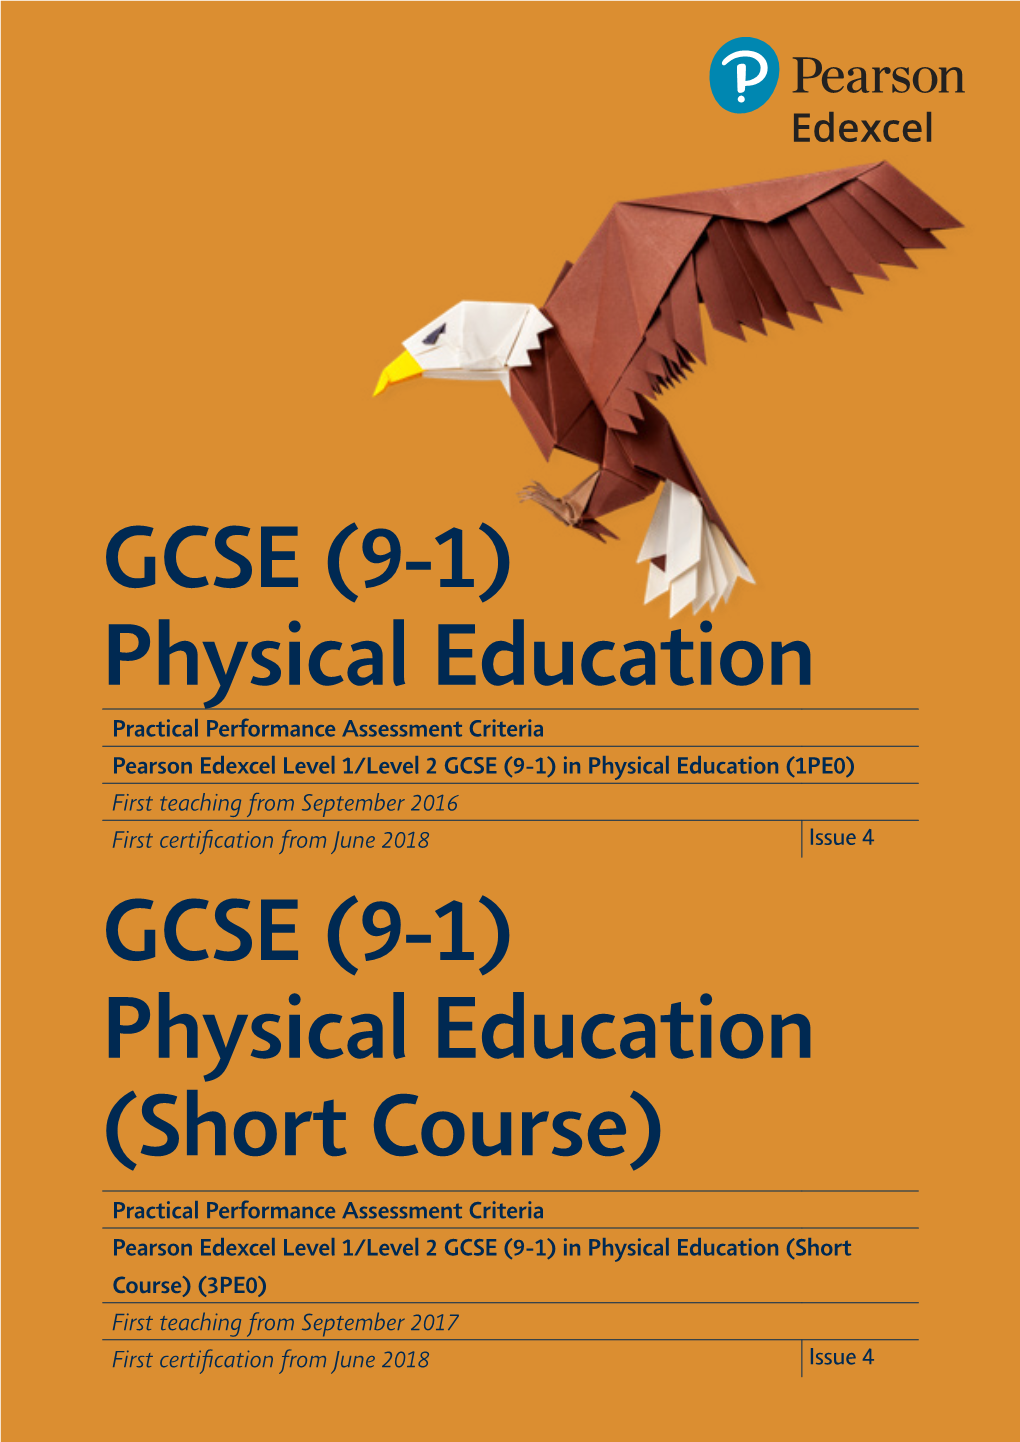 Physical Education (Short Course) GCSE (9-1)